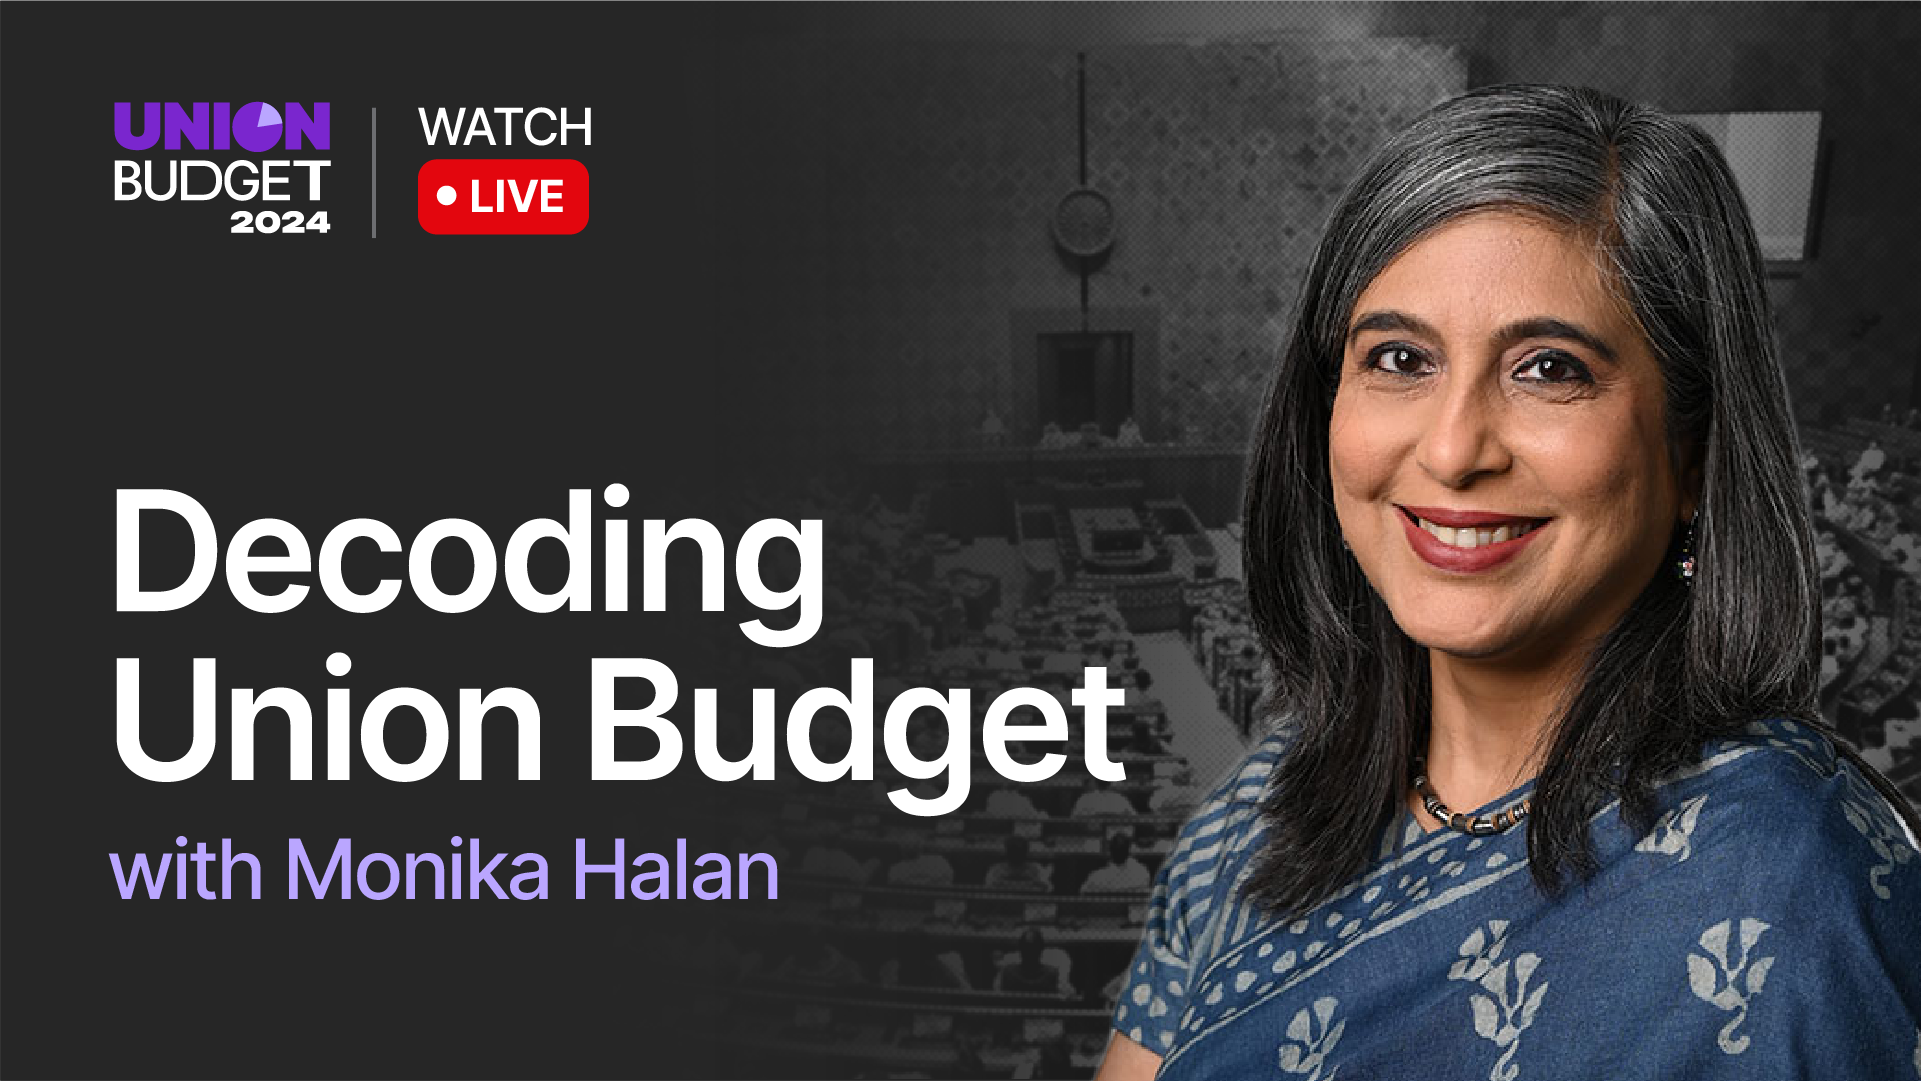 Watch Monika Halan and Lisa Pallavi Barbora decode Union Budget 2024 provisions